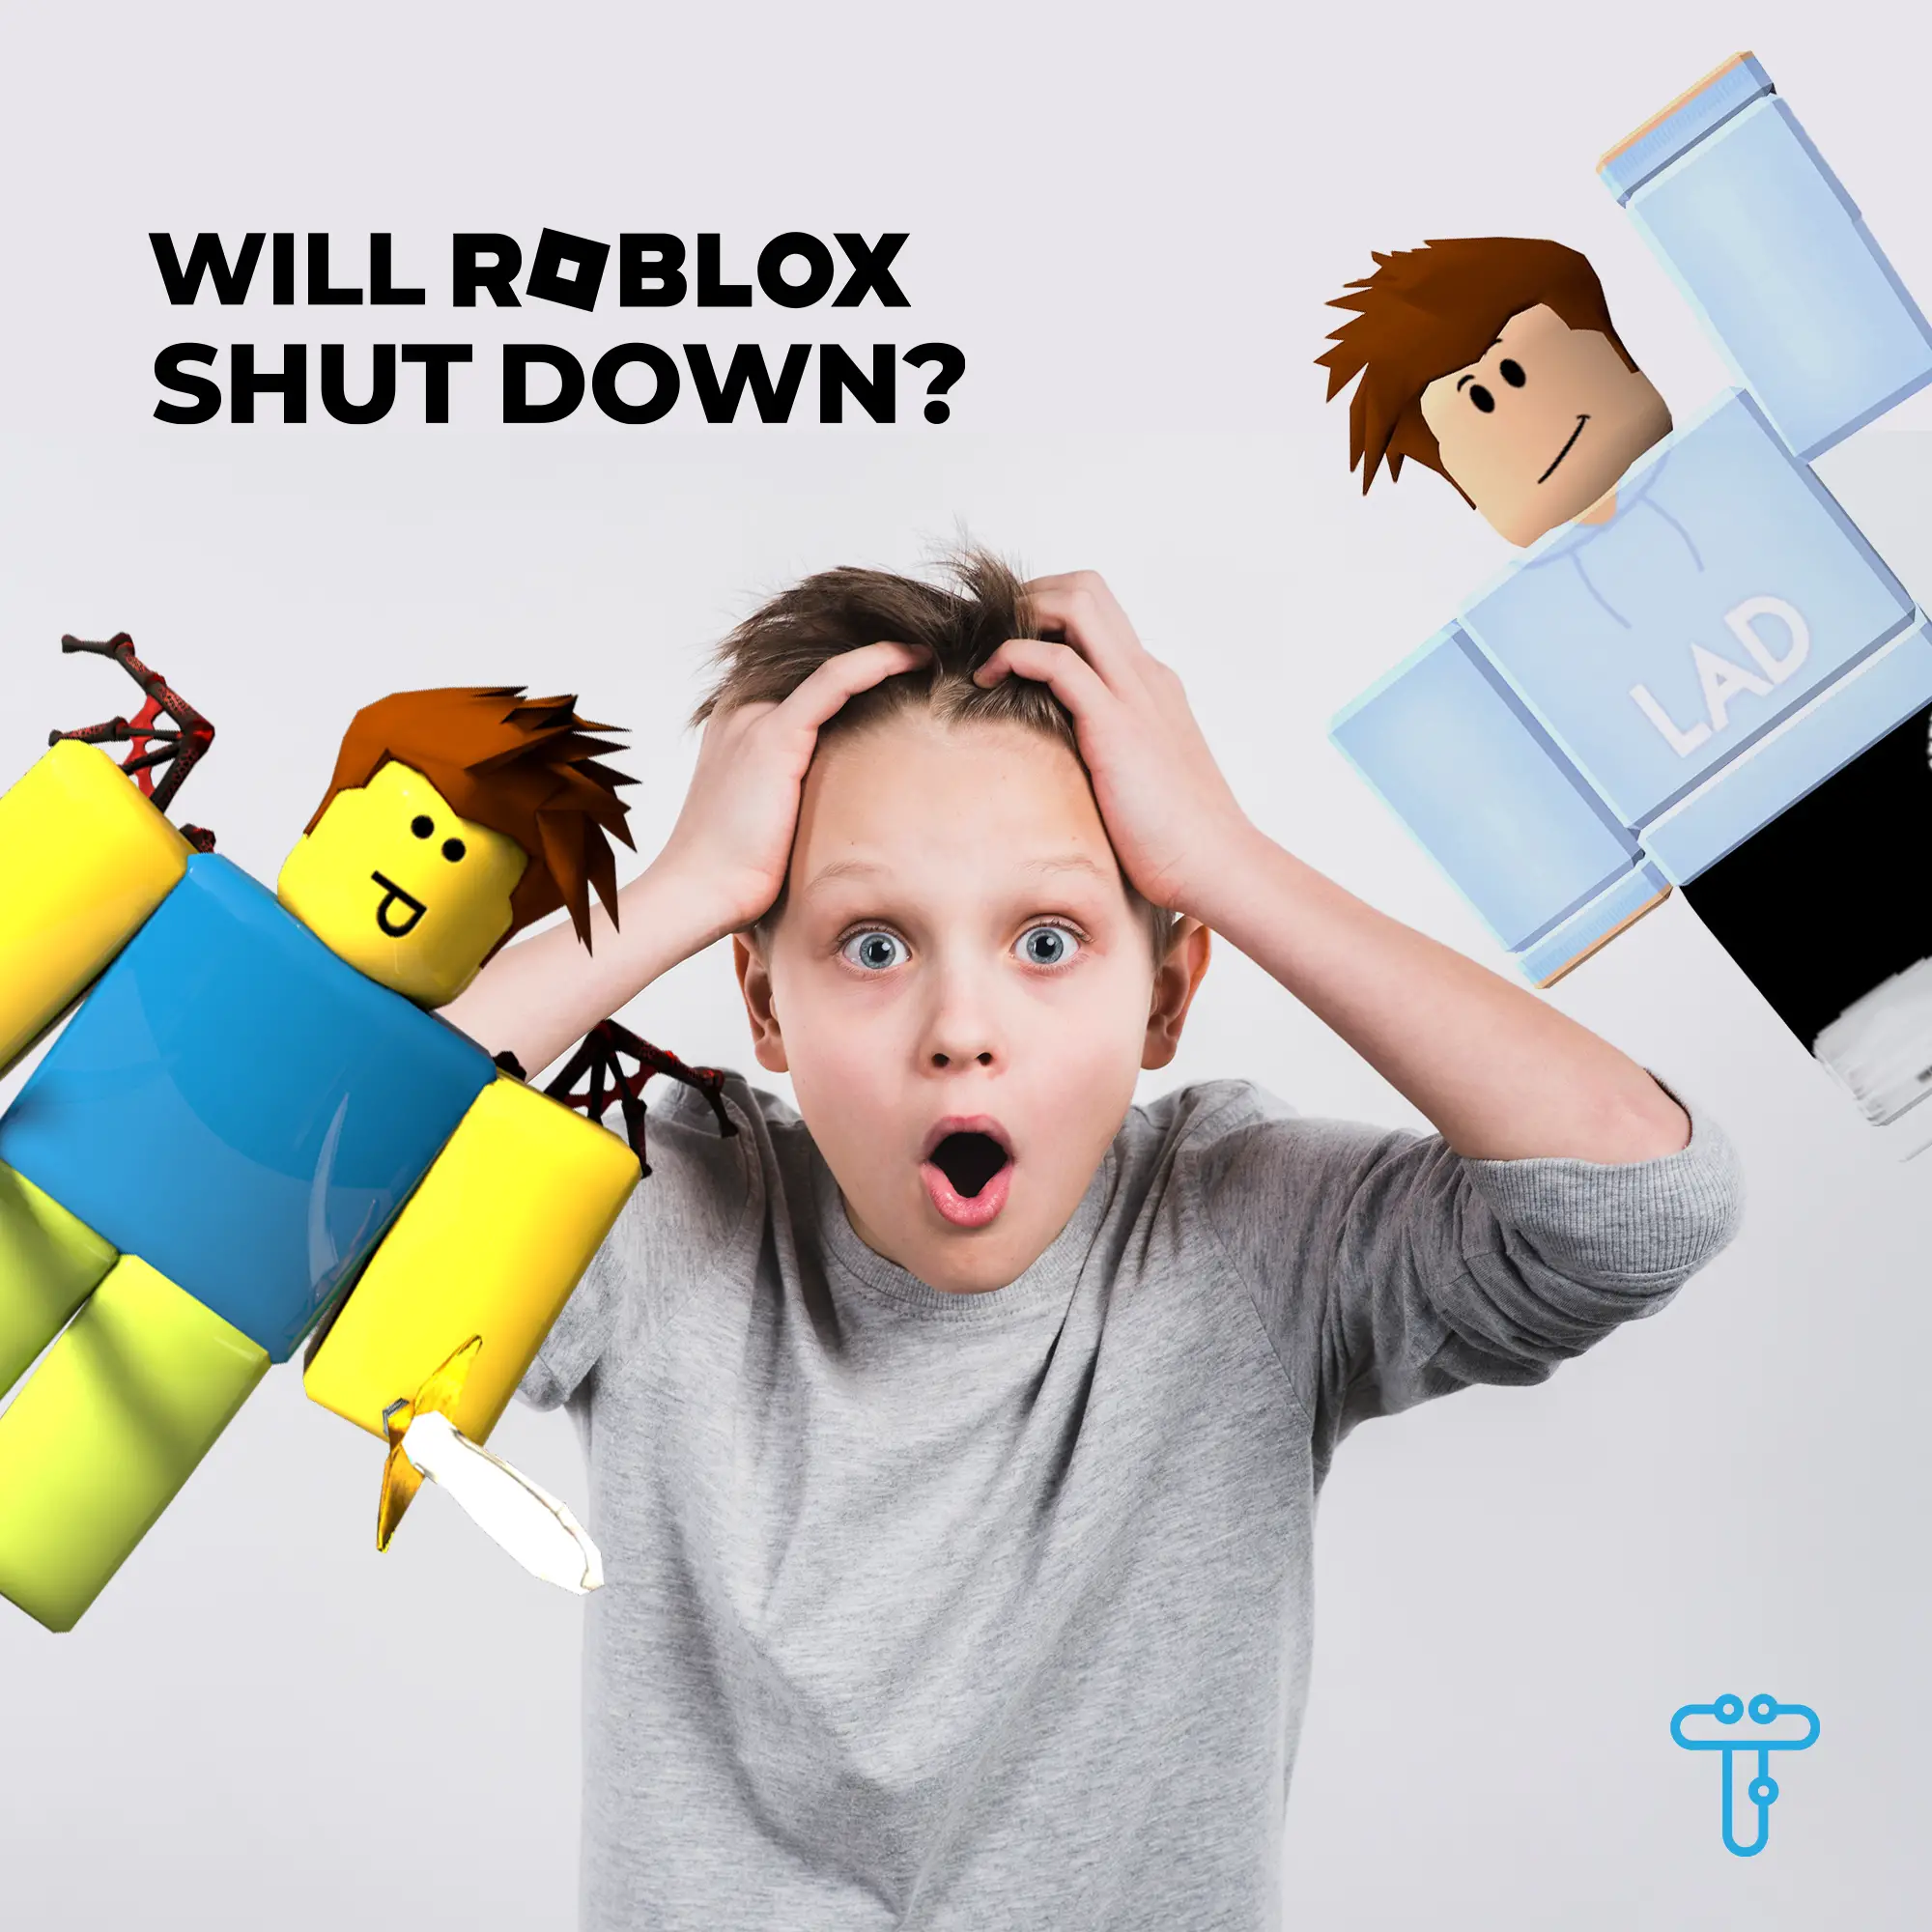 will Roblox shut down image